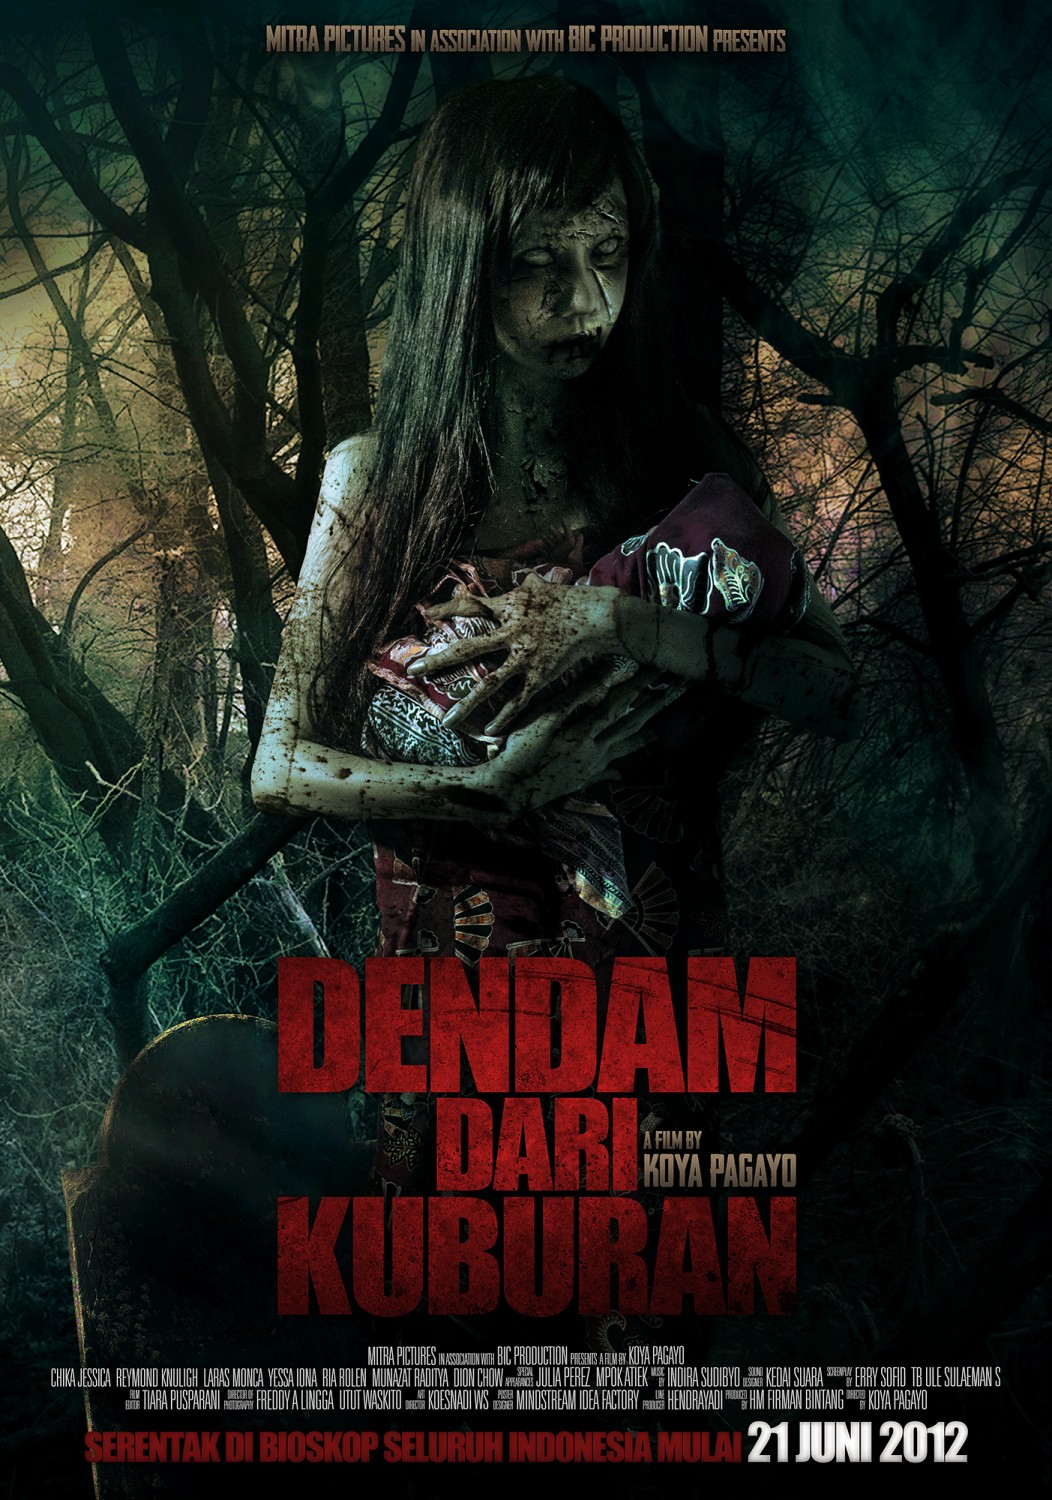 Extra Large Movie Poster Image for Dendam dari Kuburan 